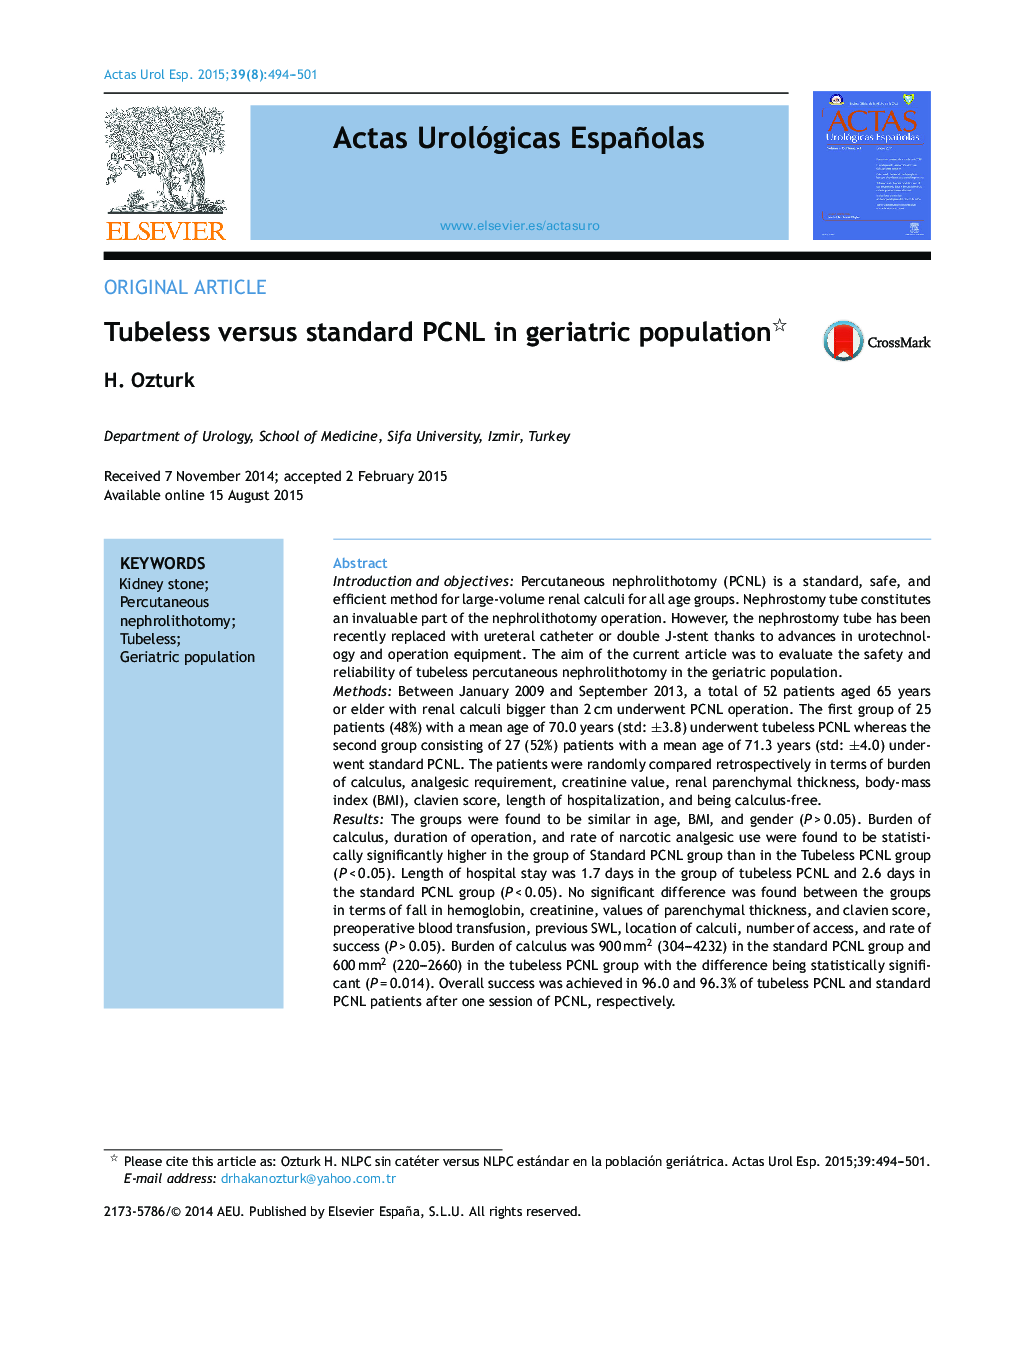 Tubeless versus standard PCNL in geriatric population 